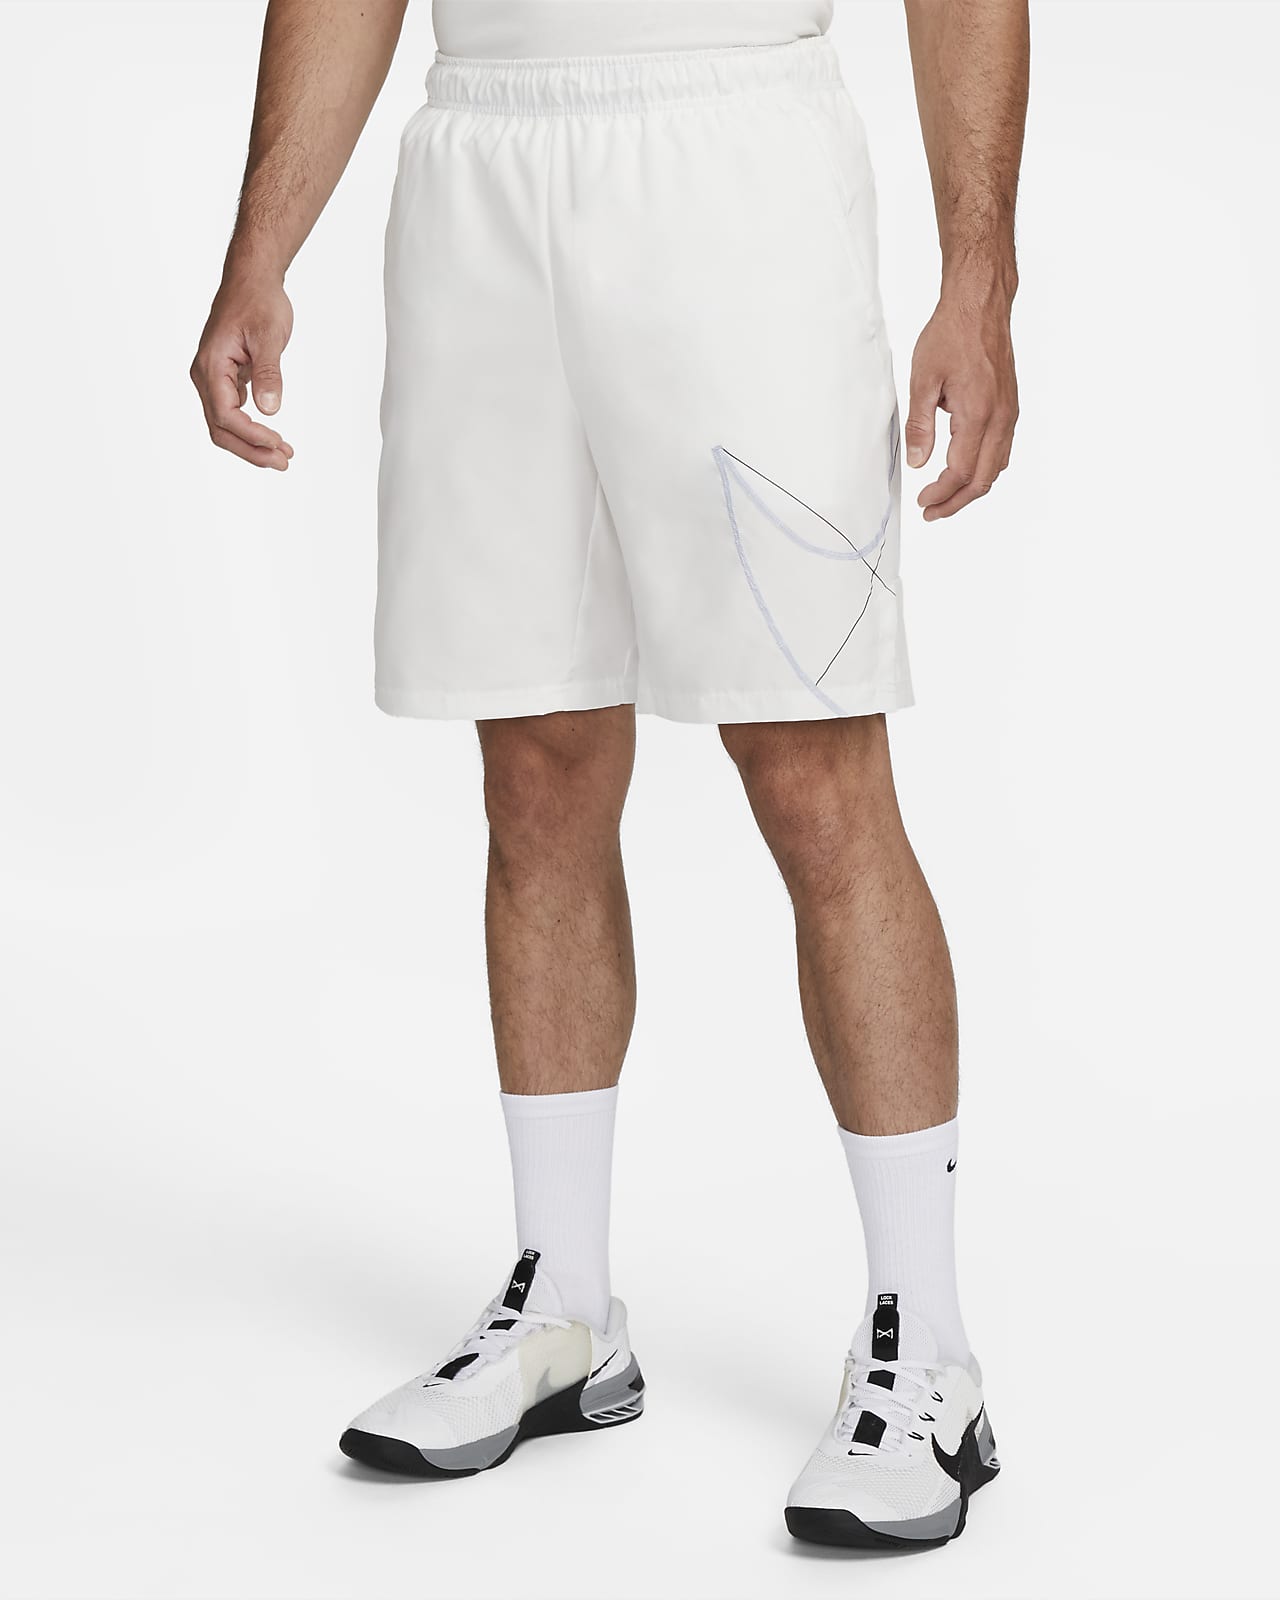 lavanda arbusto Atravesar Shorts de fitness de 23 cm para hombre tejido Woven Nike Dri-FIT Flex. Nike .com